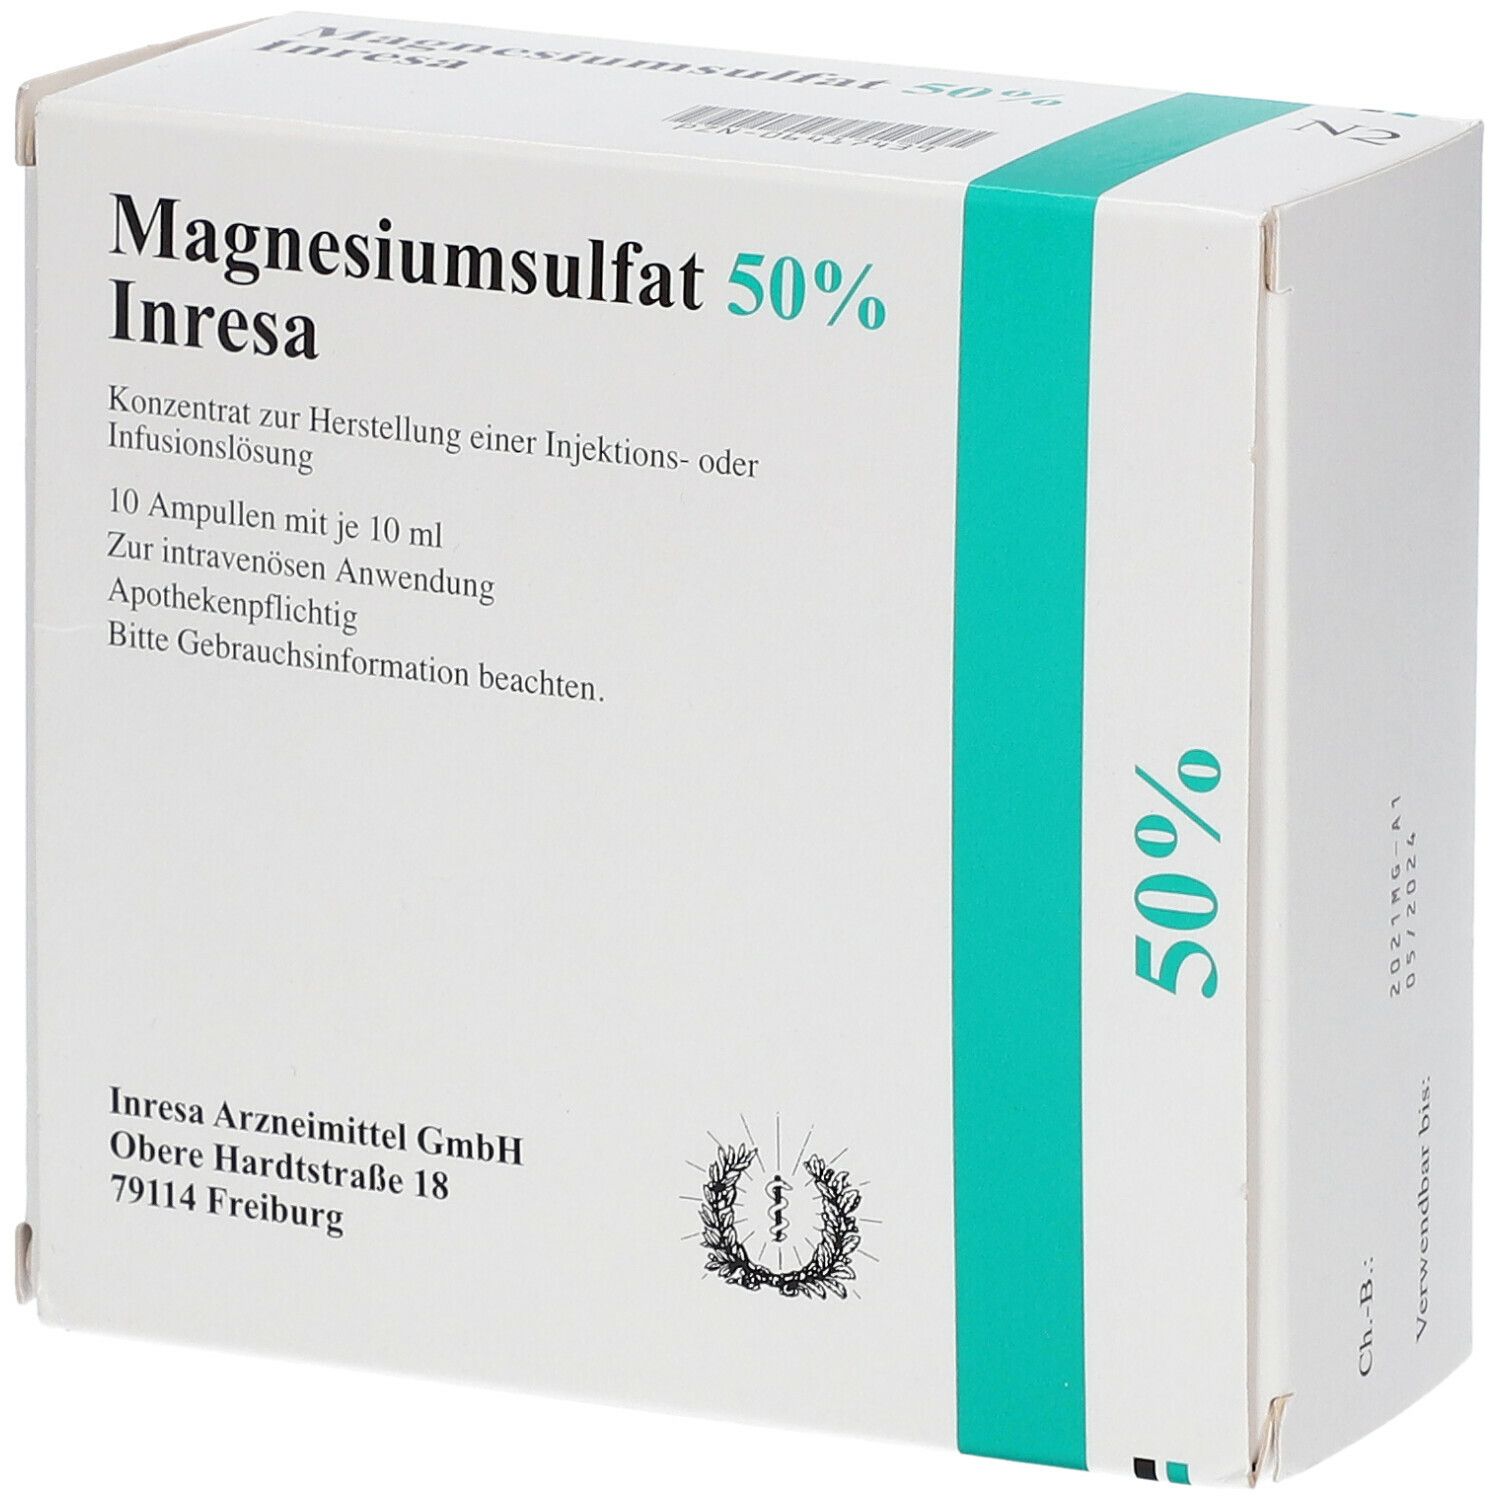 Magnesiumsulfat 50% Inresa Konz.z.H.e.Inj.-/inf.L.